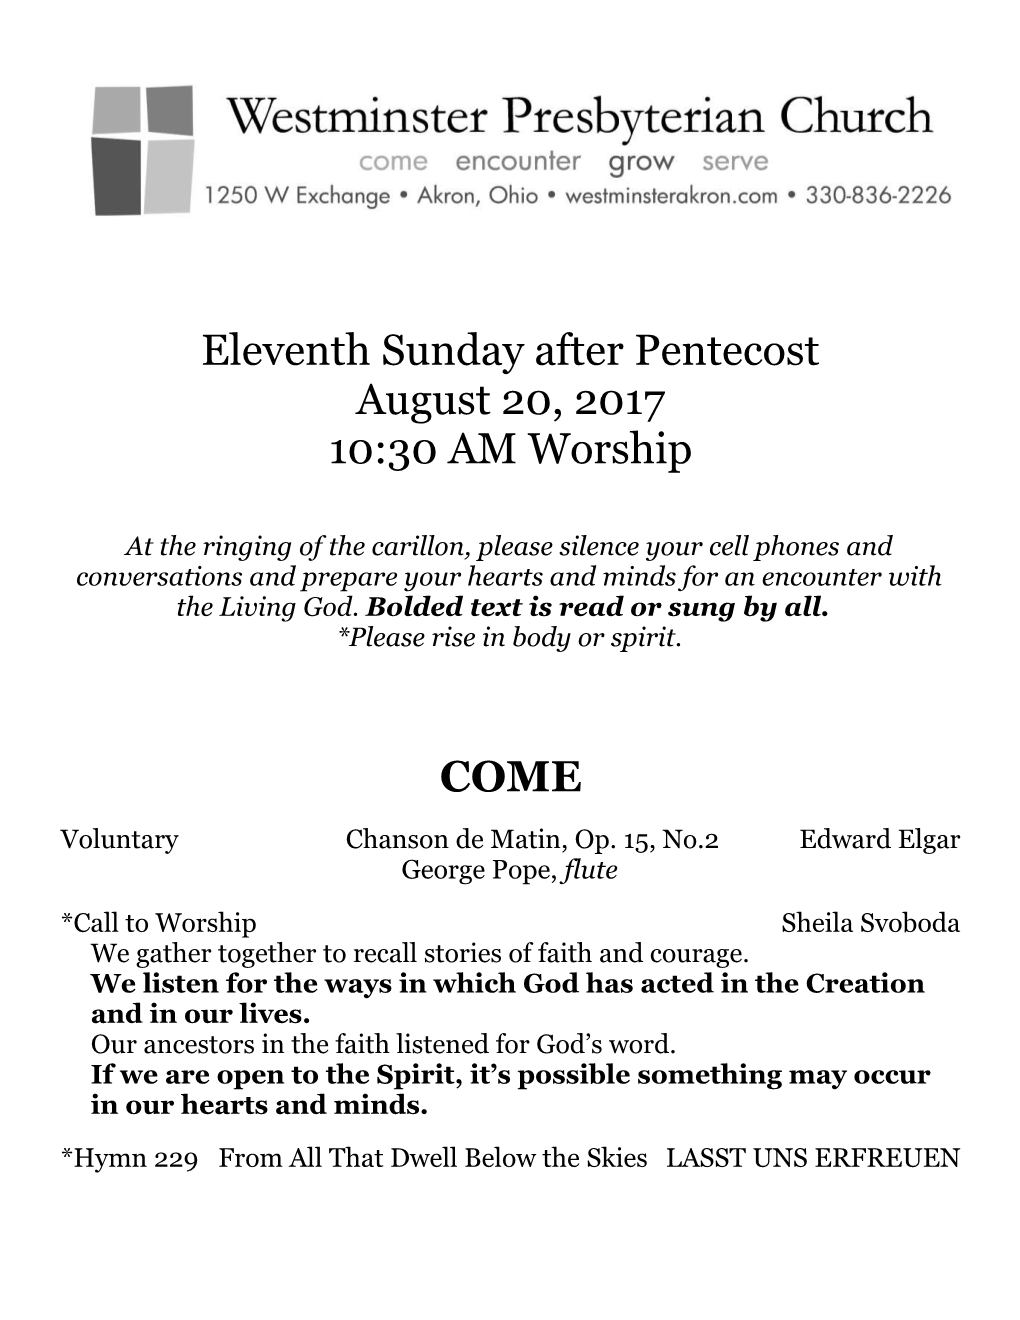 Eleventh Sunday After Pentecost